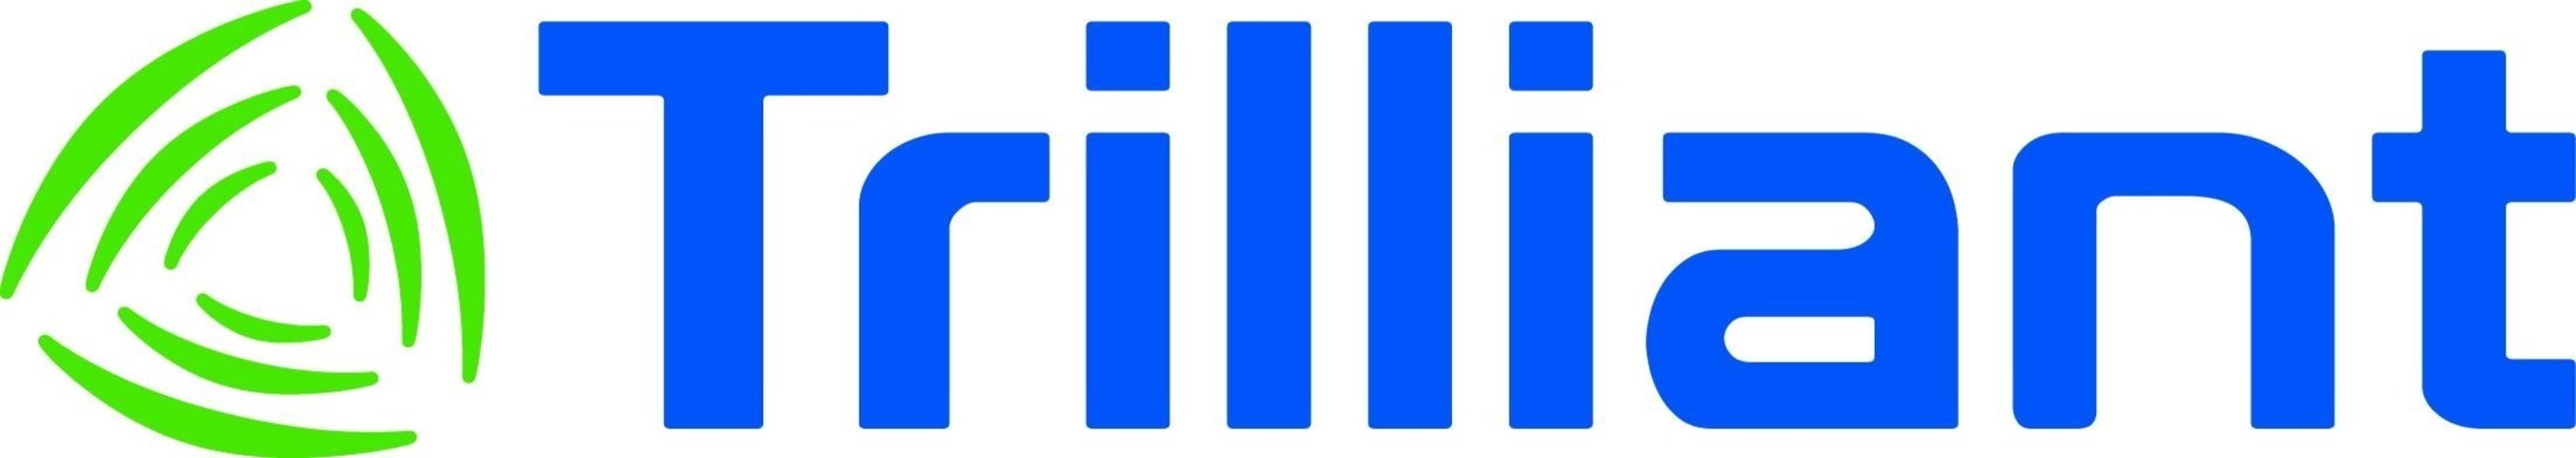 Trilliant Logo